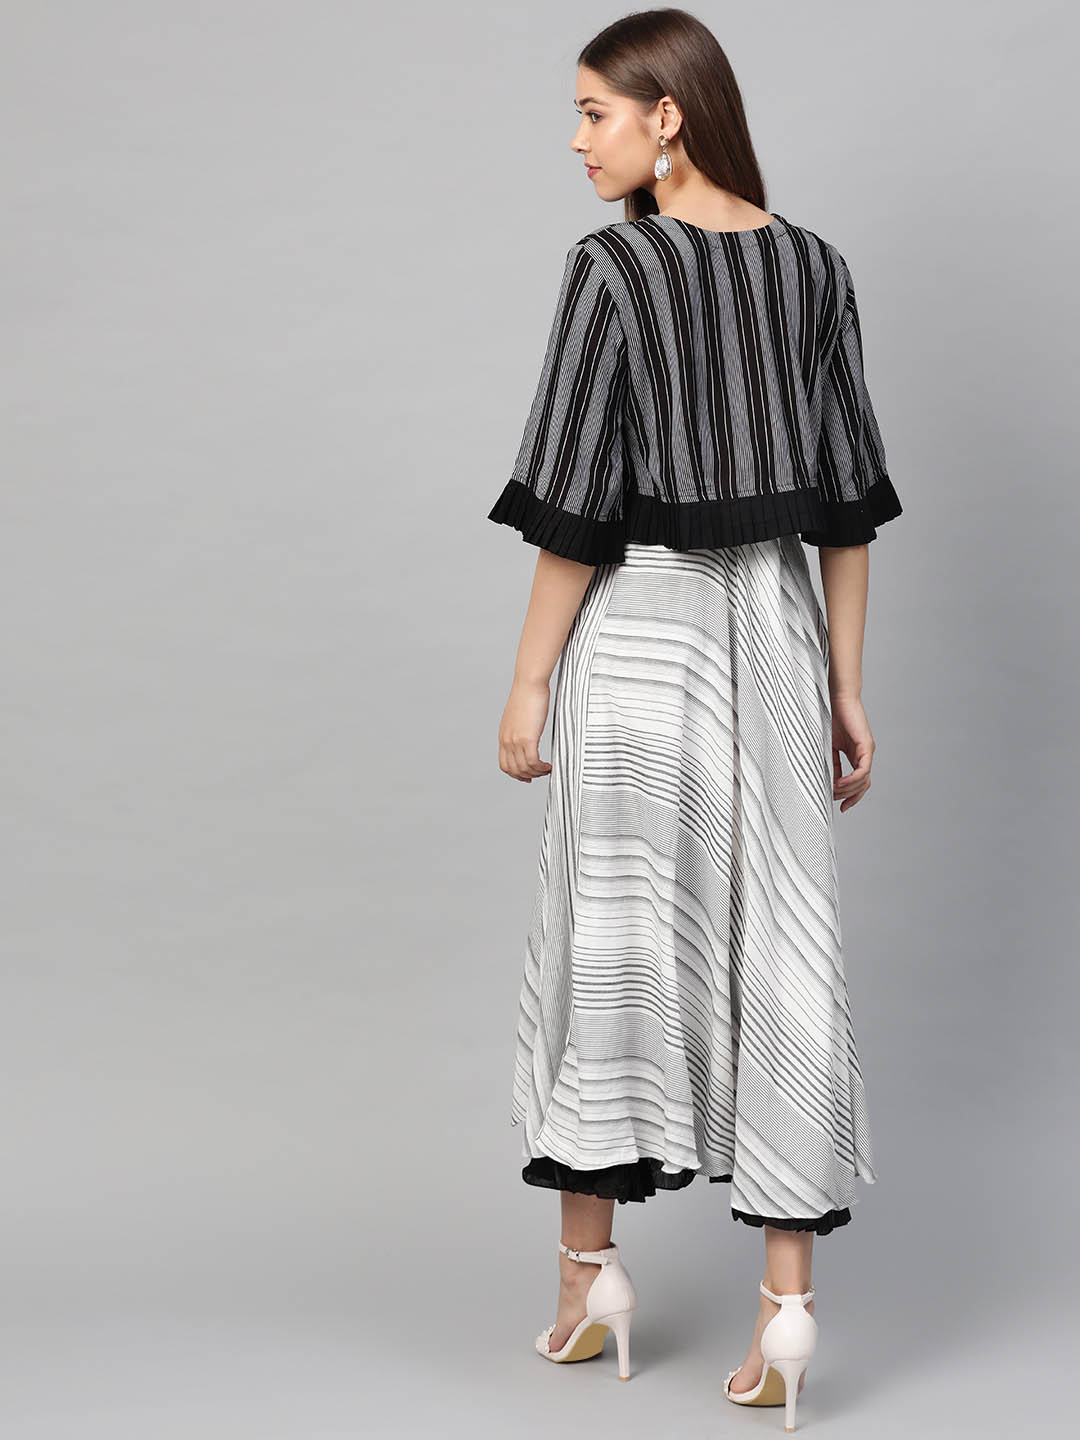 White & Black Striped Maxi Dress With Shrug